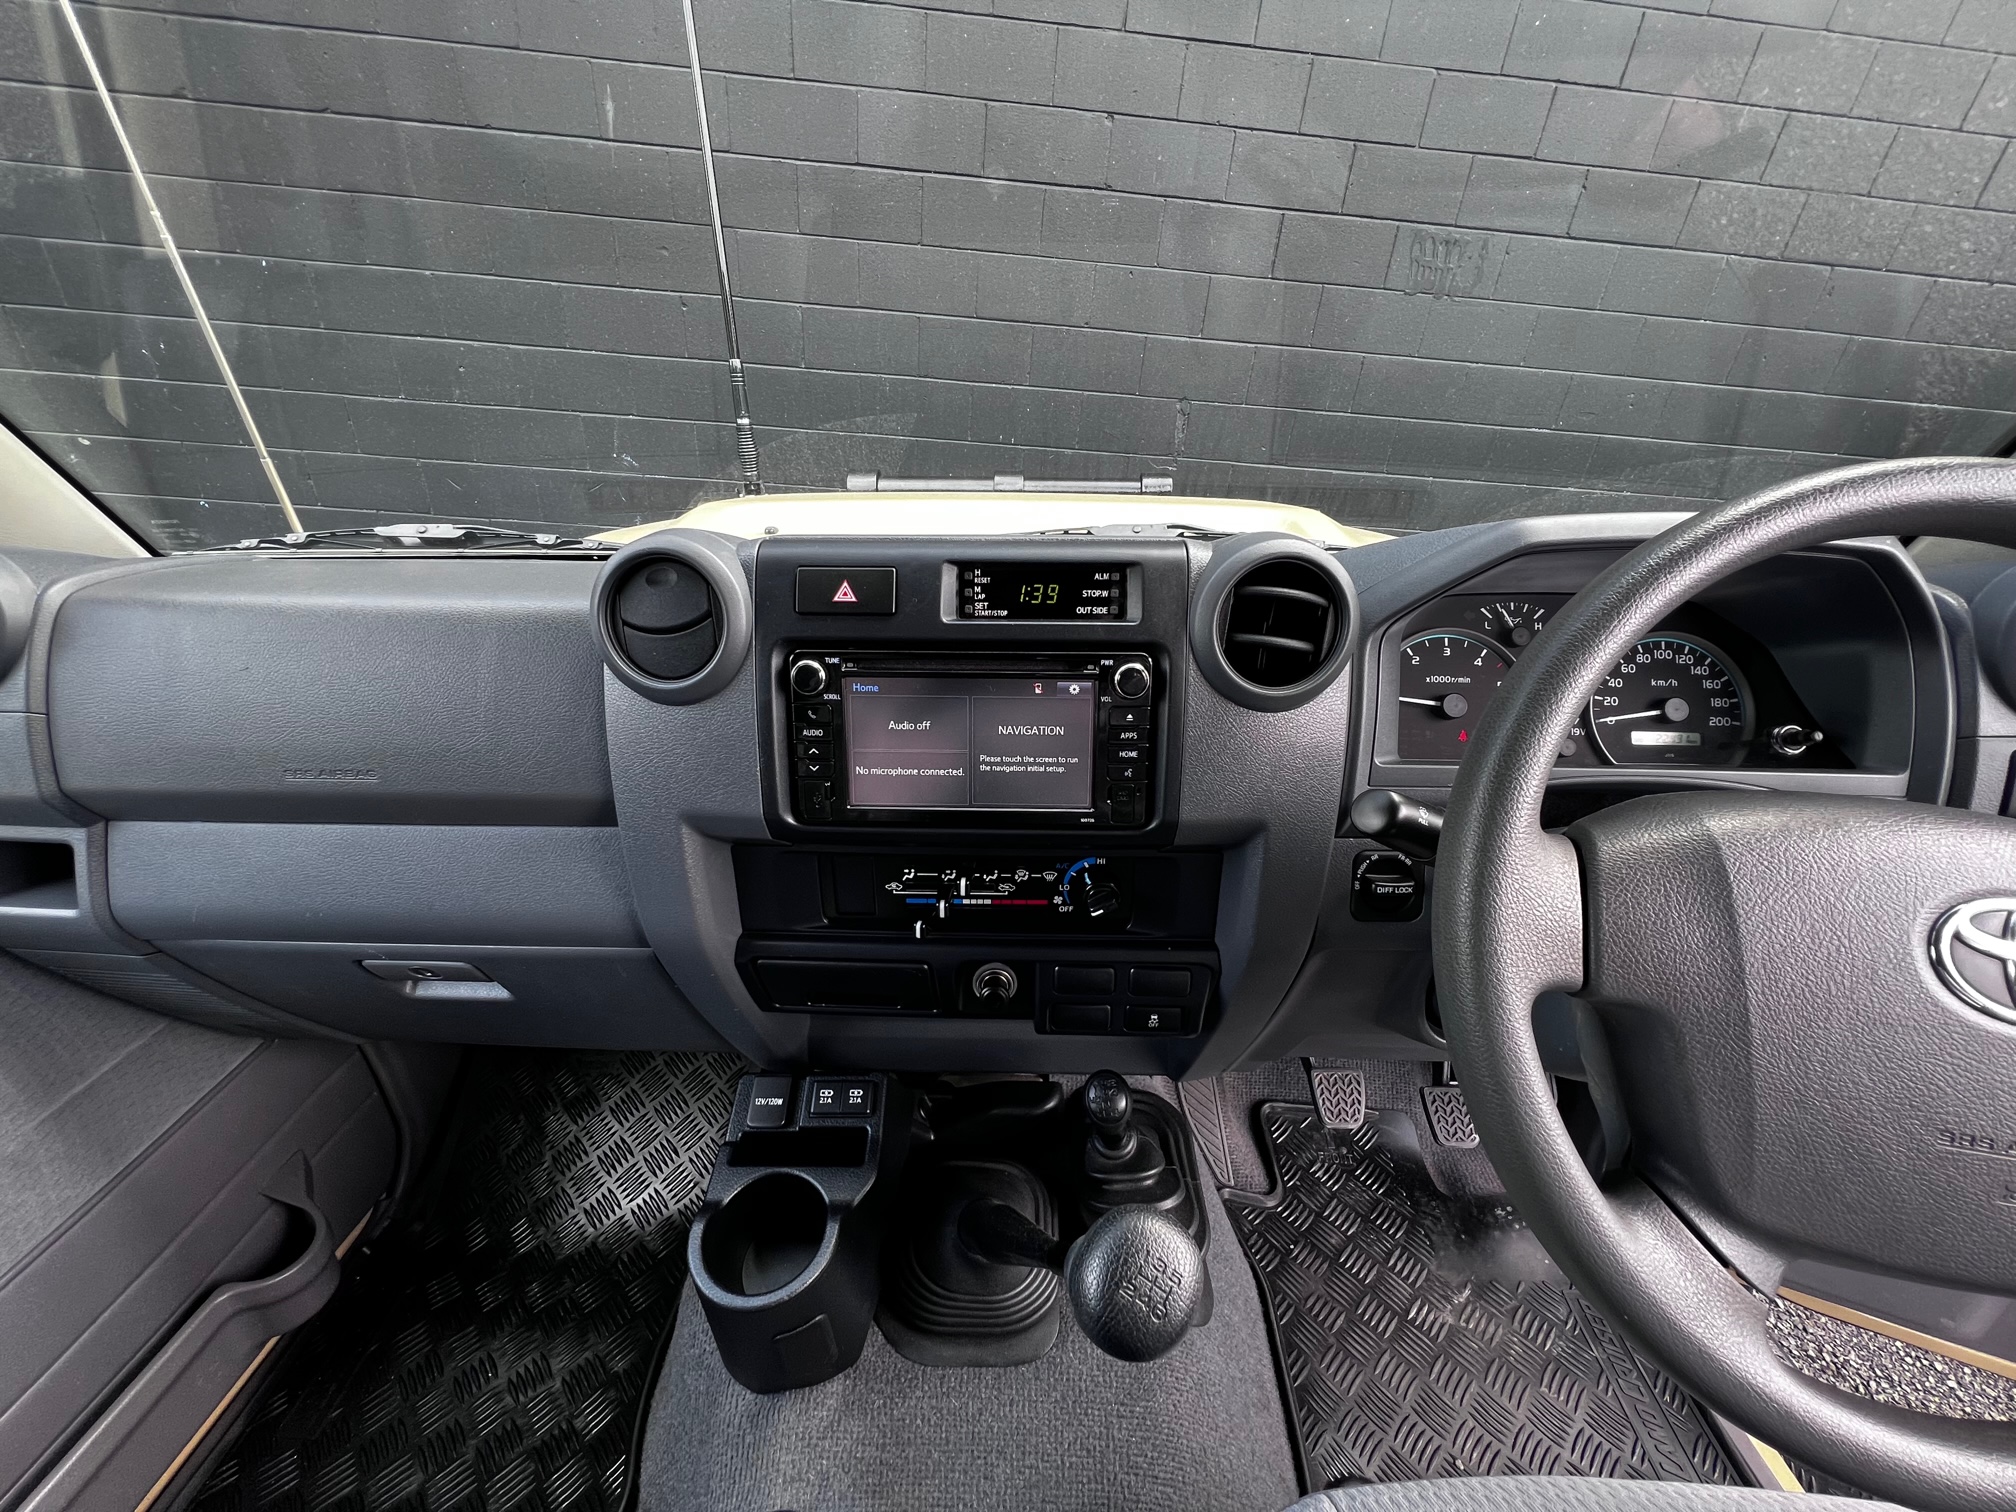 Toyota Landcruiser GXL 2020 Image 14